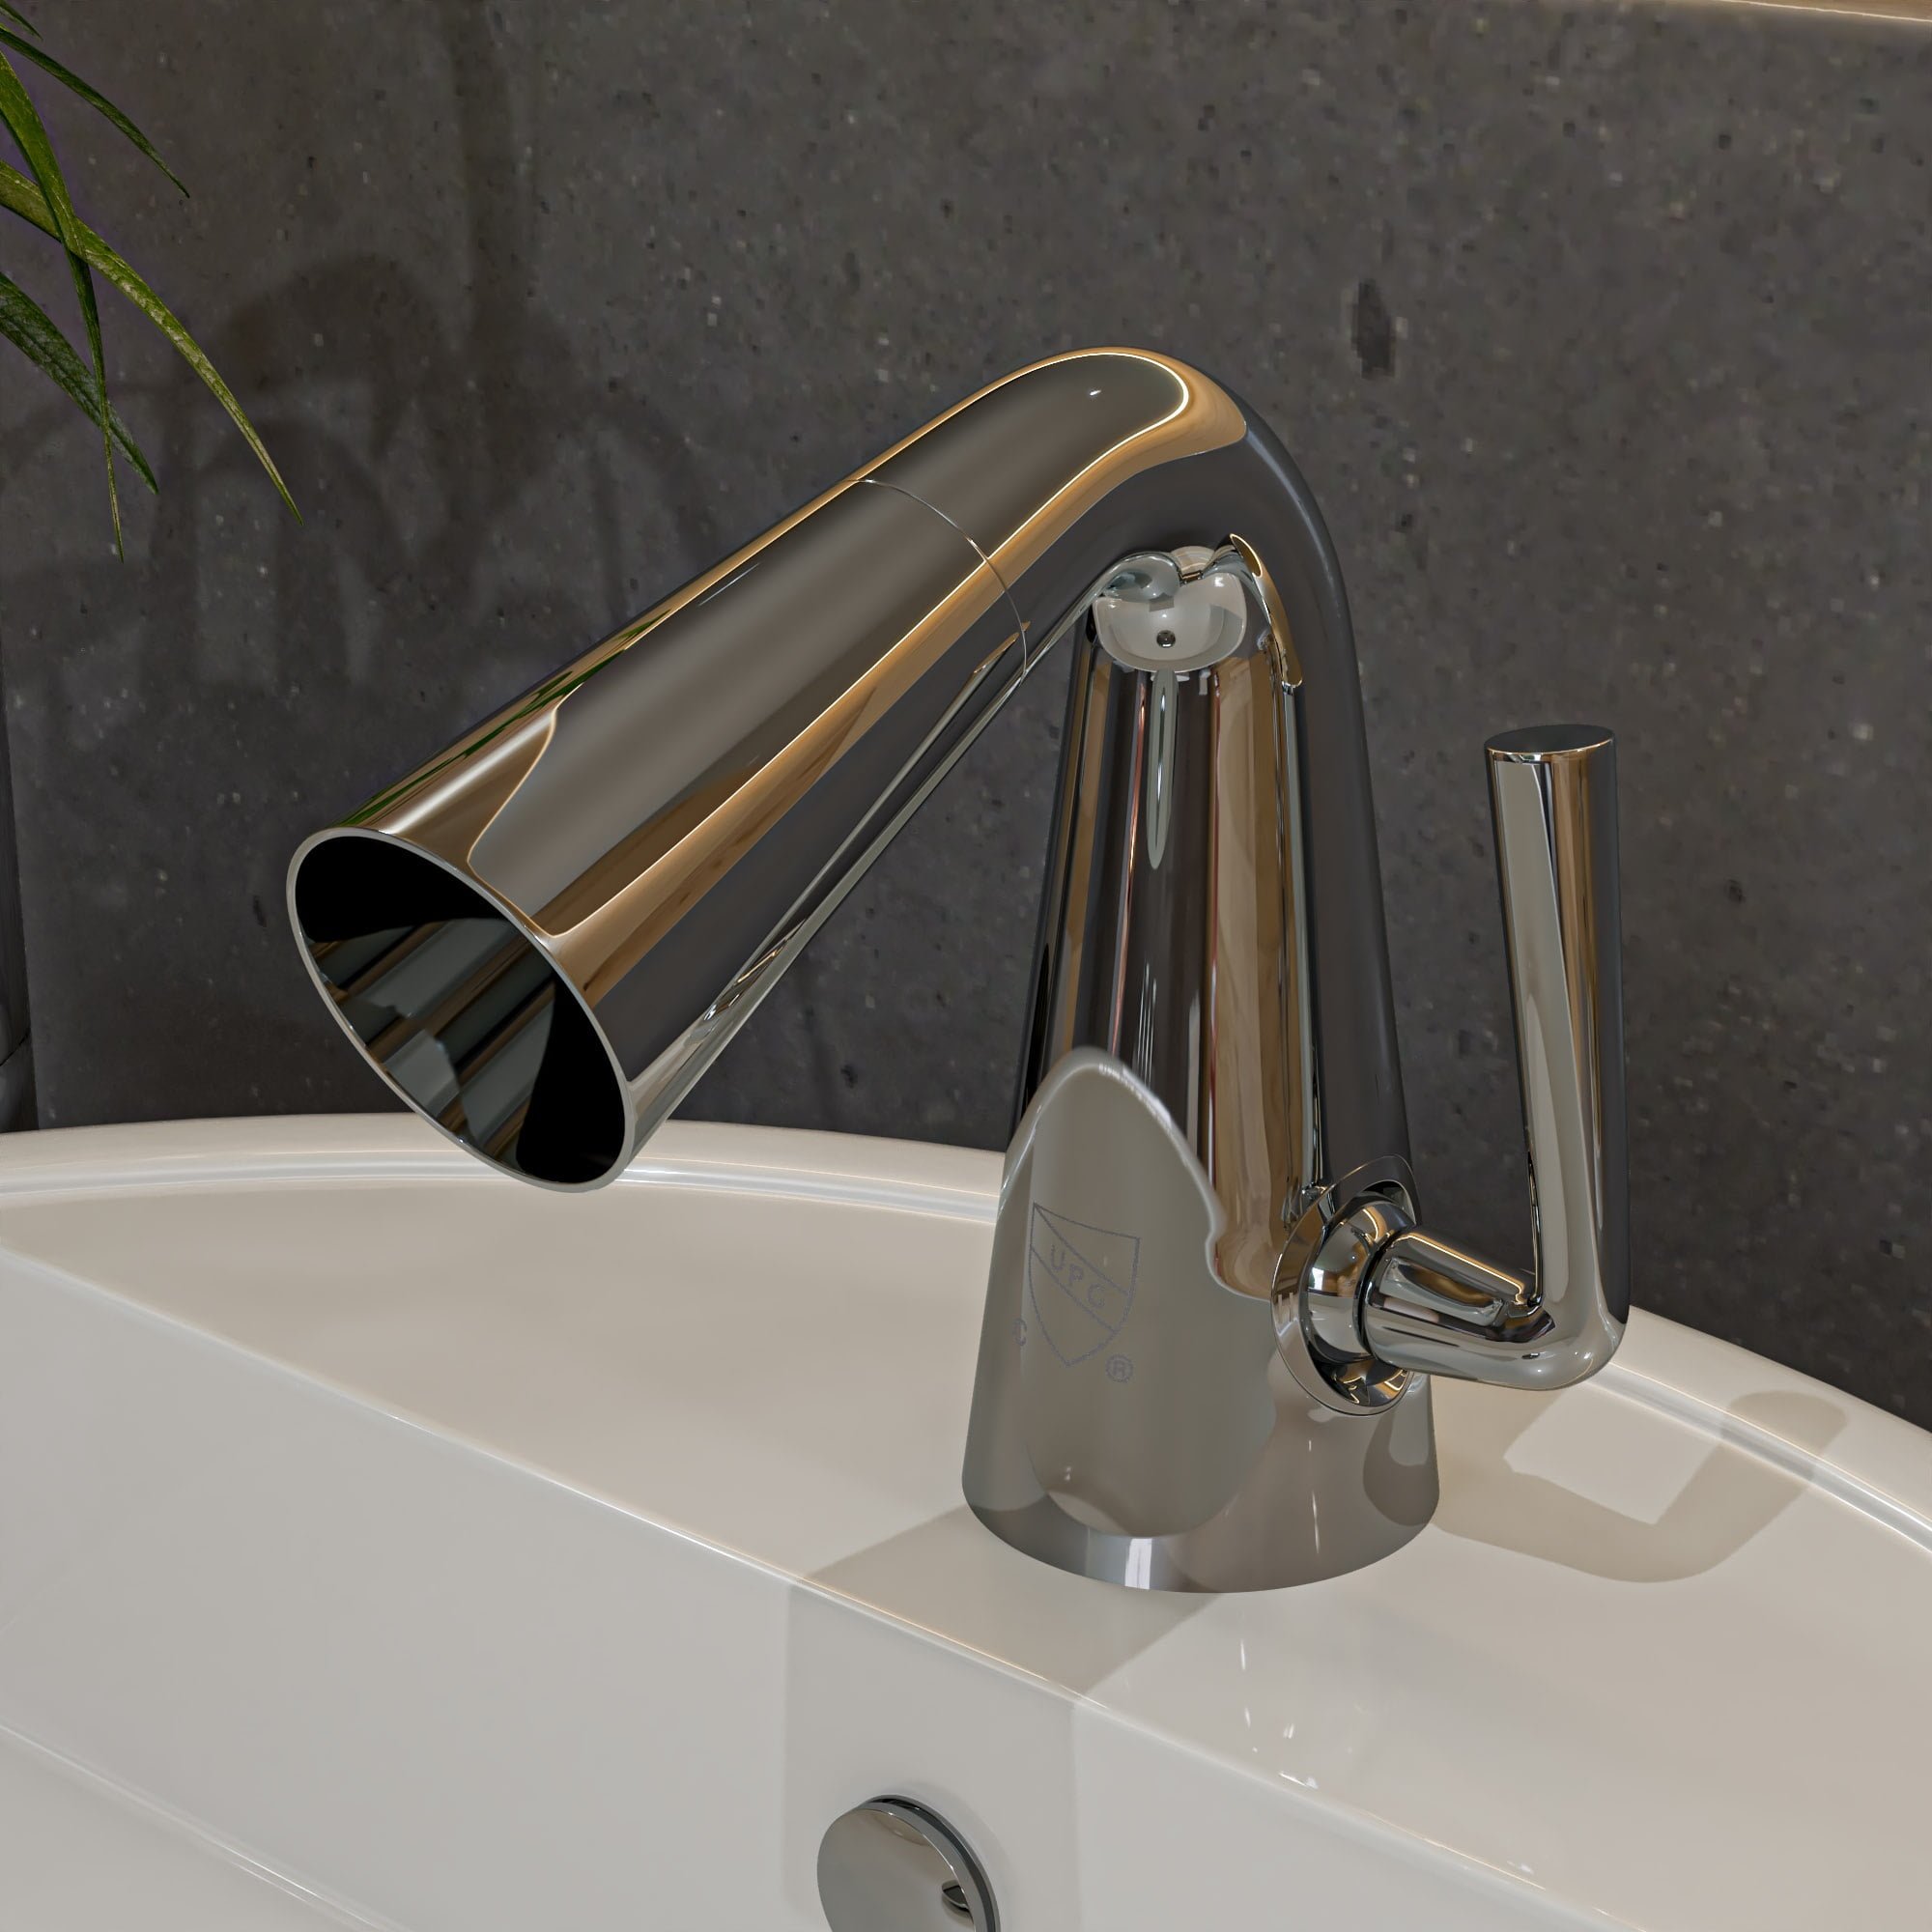 Ab1788-pc Single Hole Cone Waterfall Bathroom Faucet - Polished Chrome